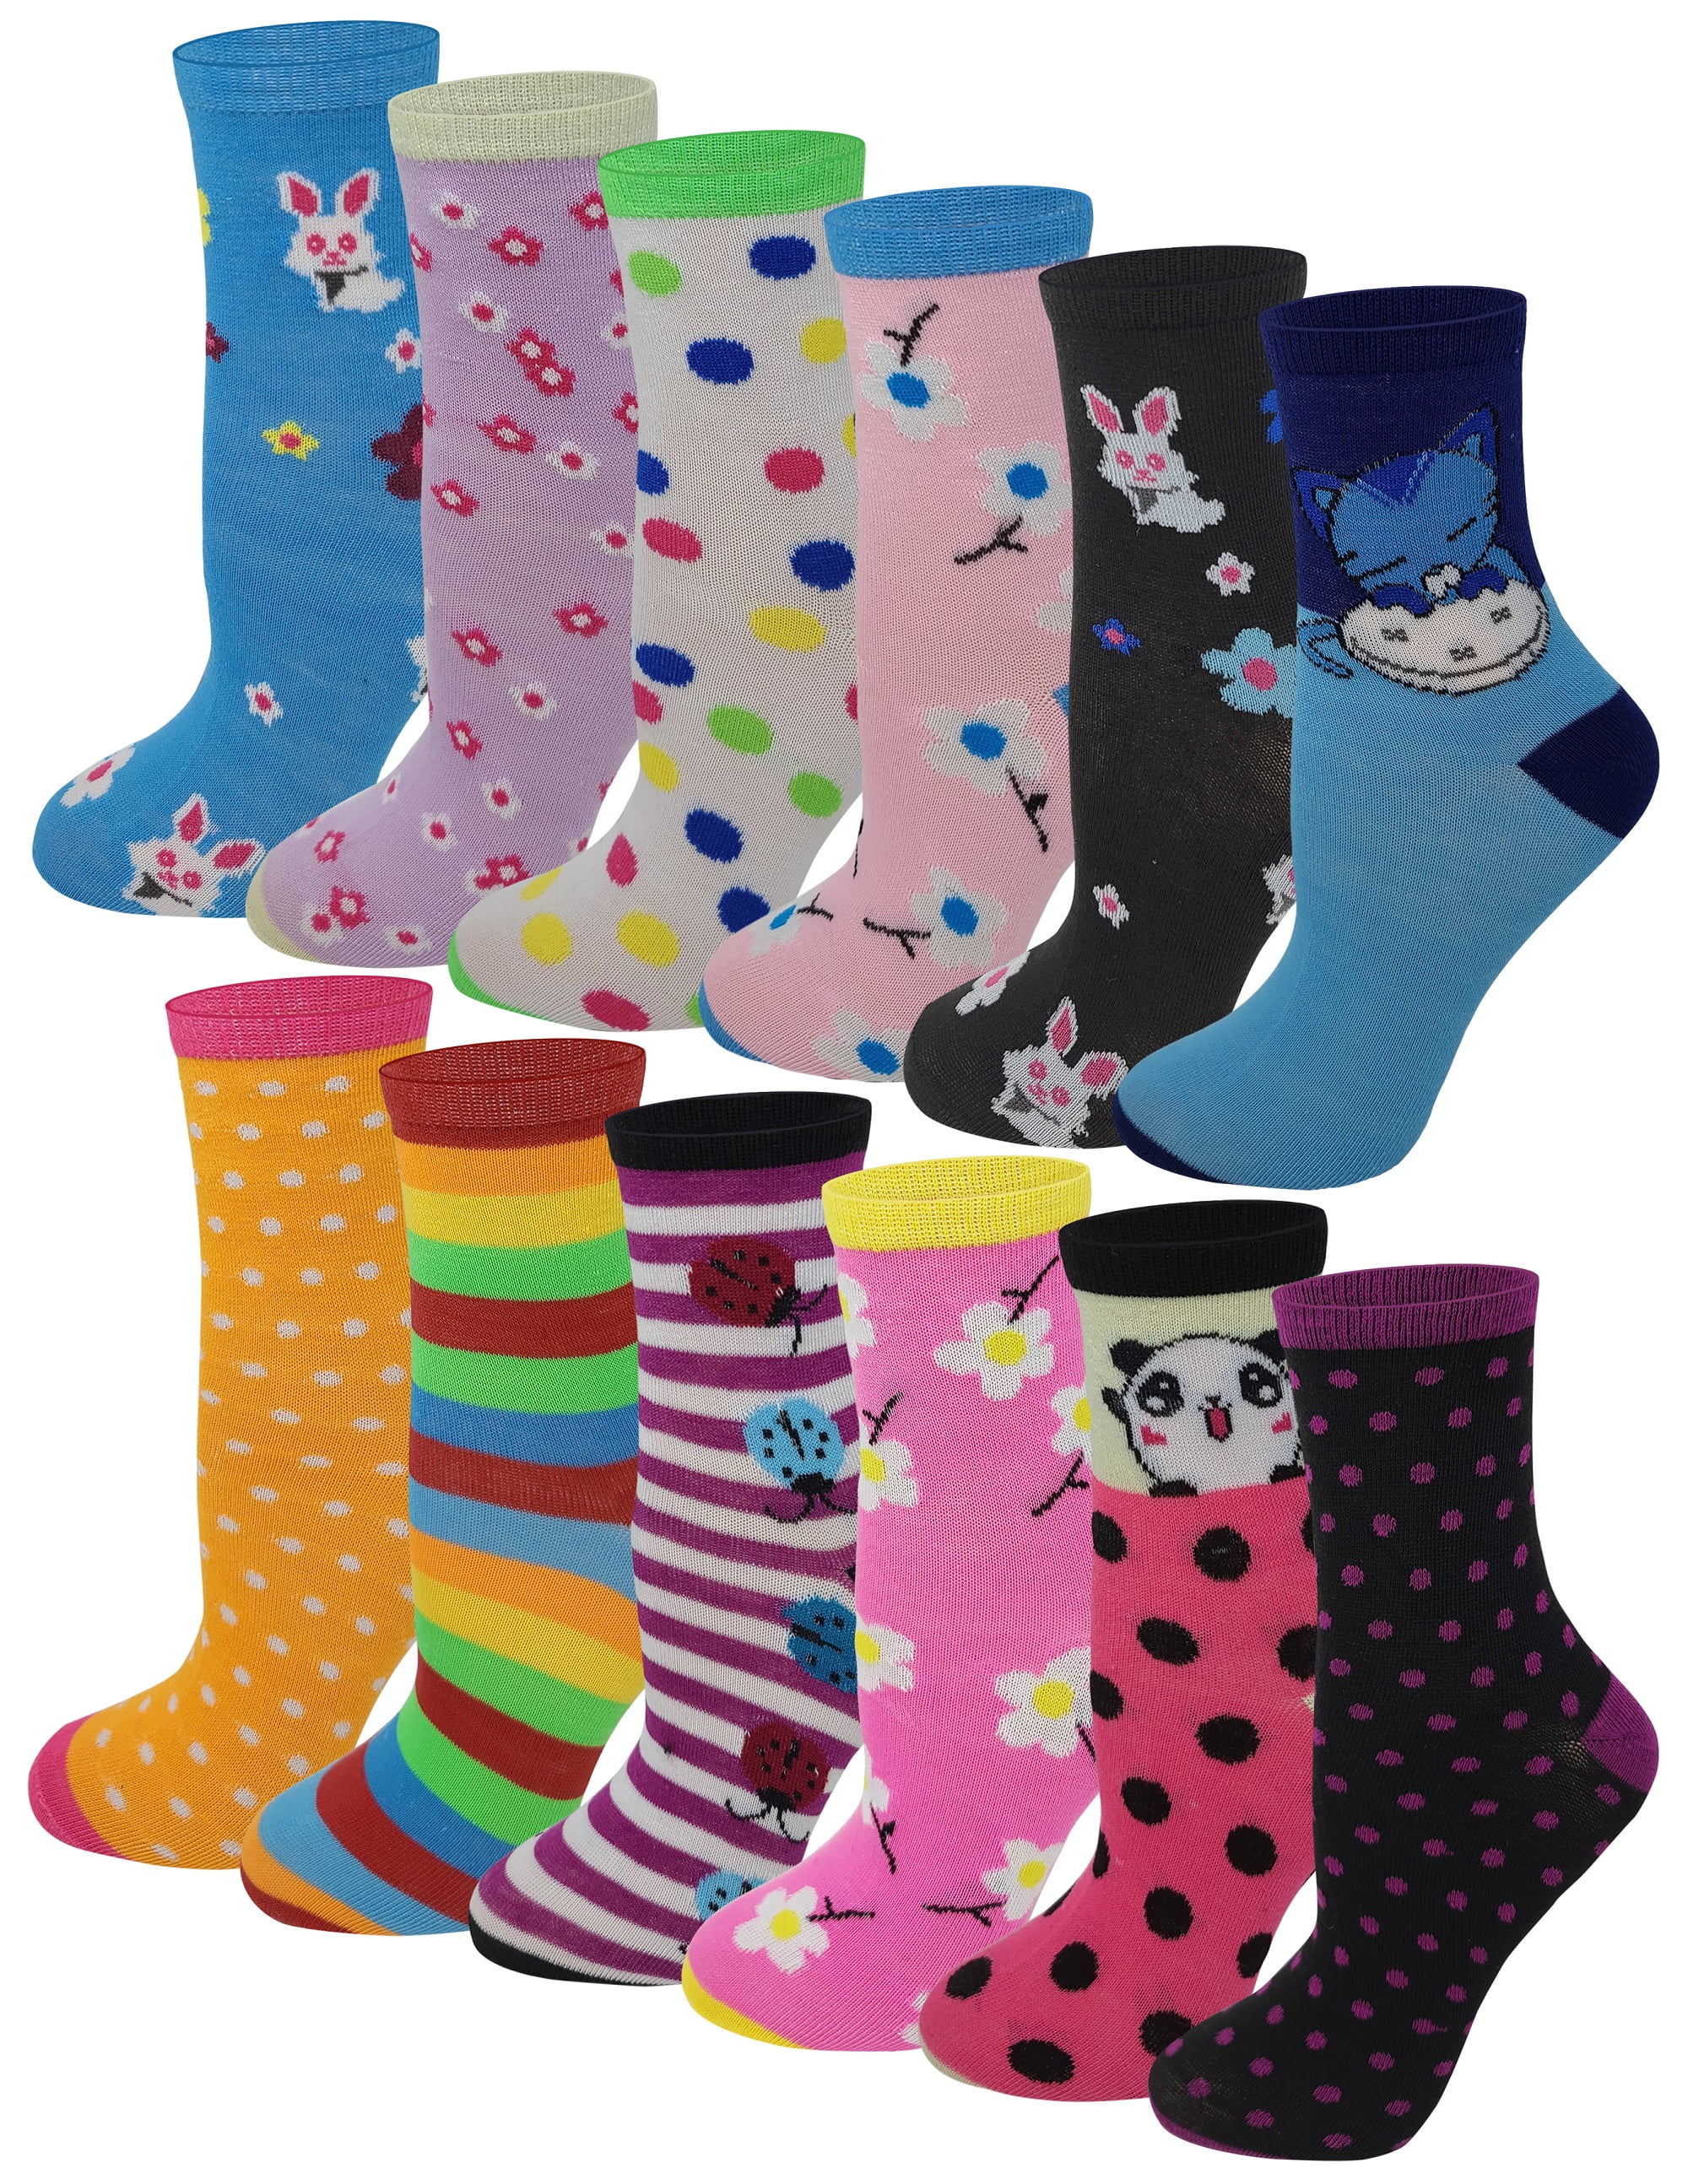 12 Pairs Pack Kids Girls Colorful Creative Fun Novelty Design Crew Socks 